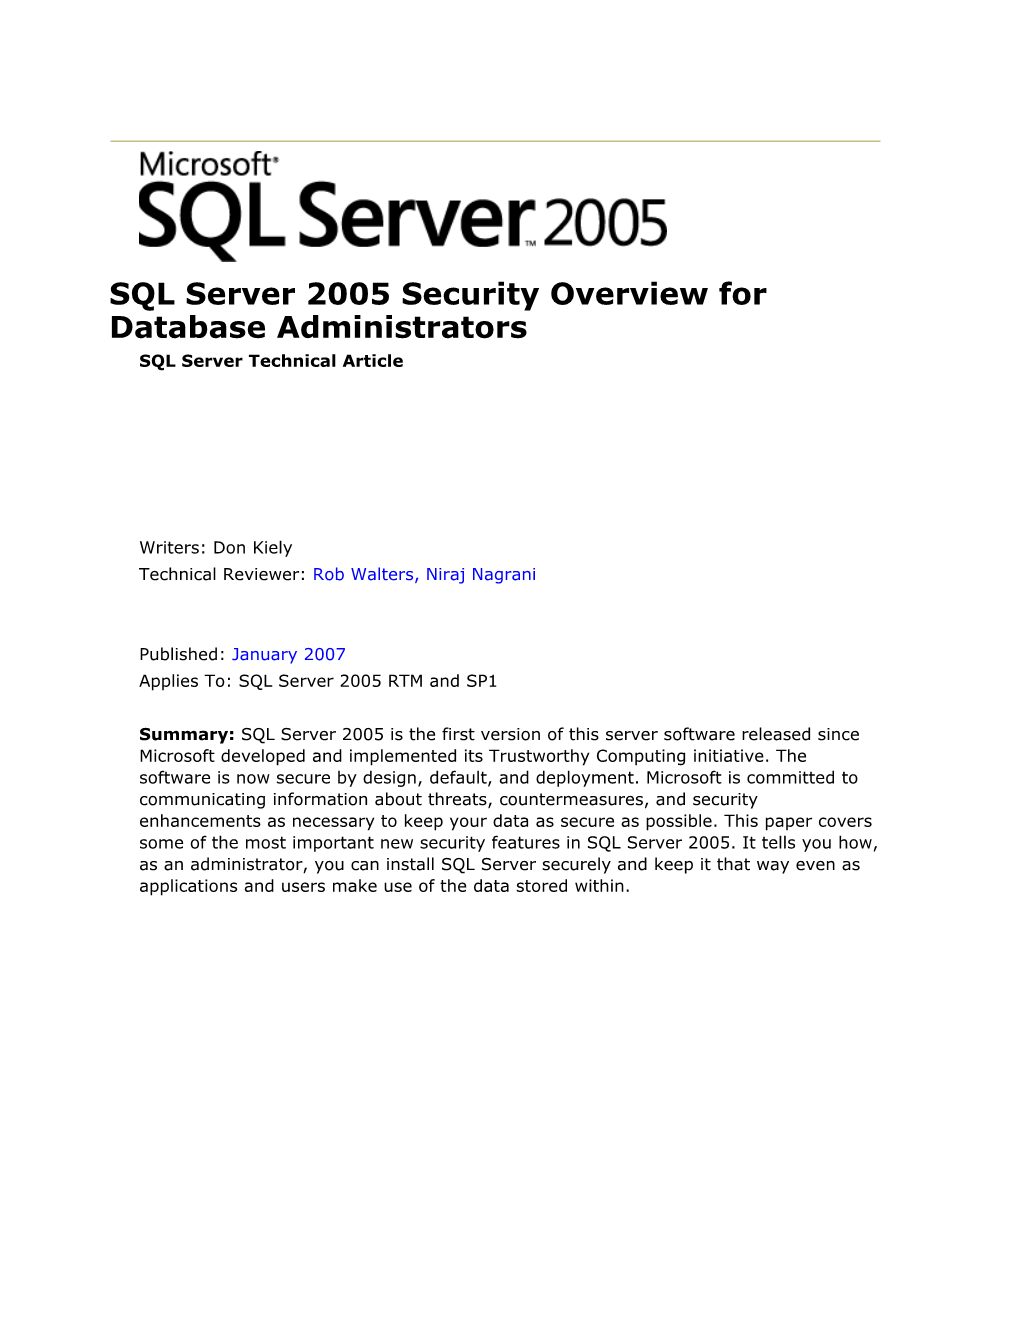 SQL Server 2005 Securityoverview for Database Administrators